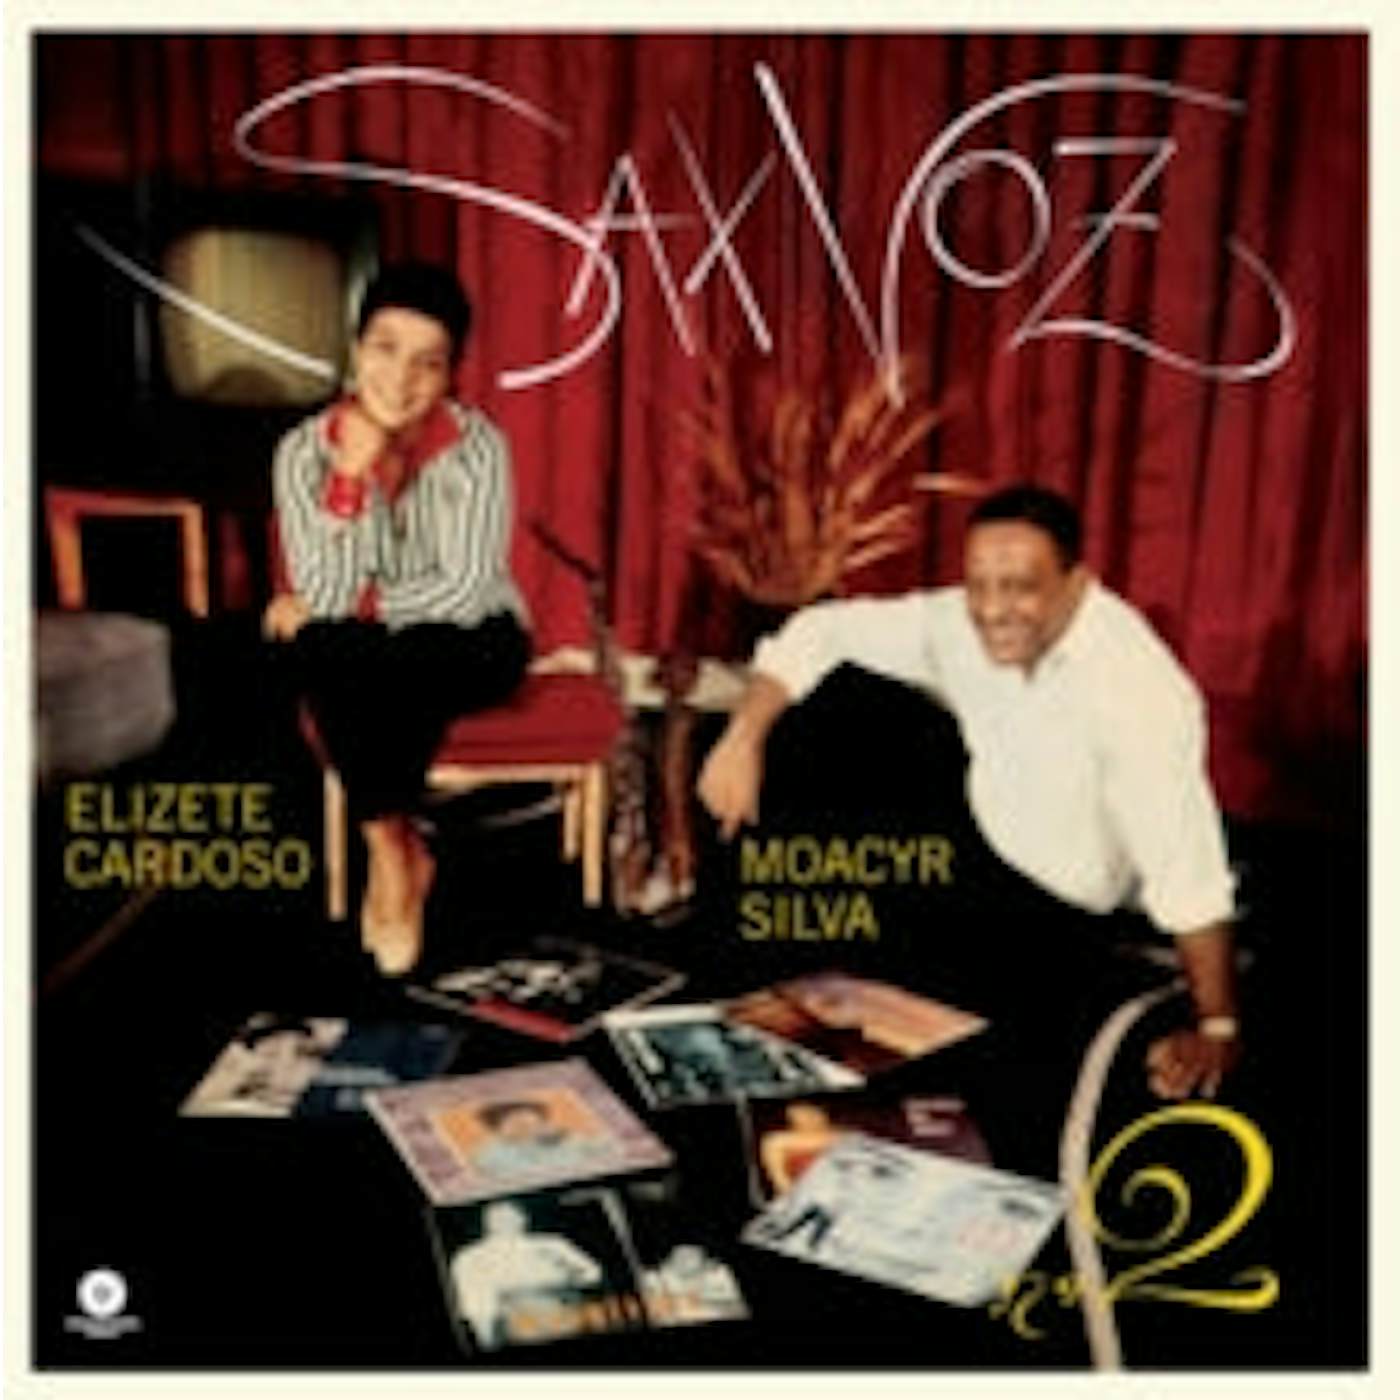 Elizete Cardoso / Moacyr Silva LP Vinyl Record - Sax Voz No. 2